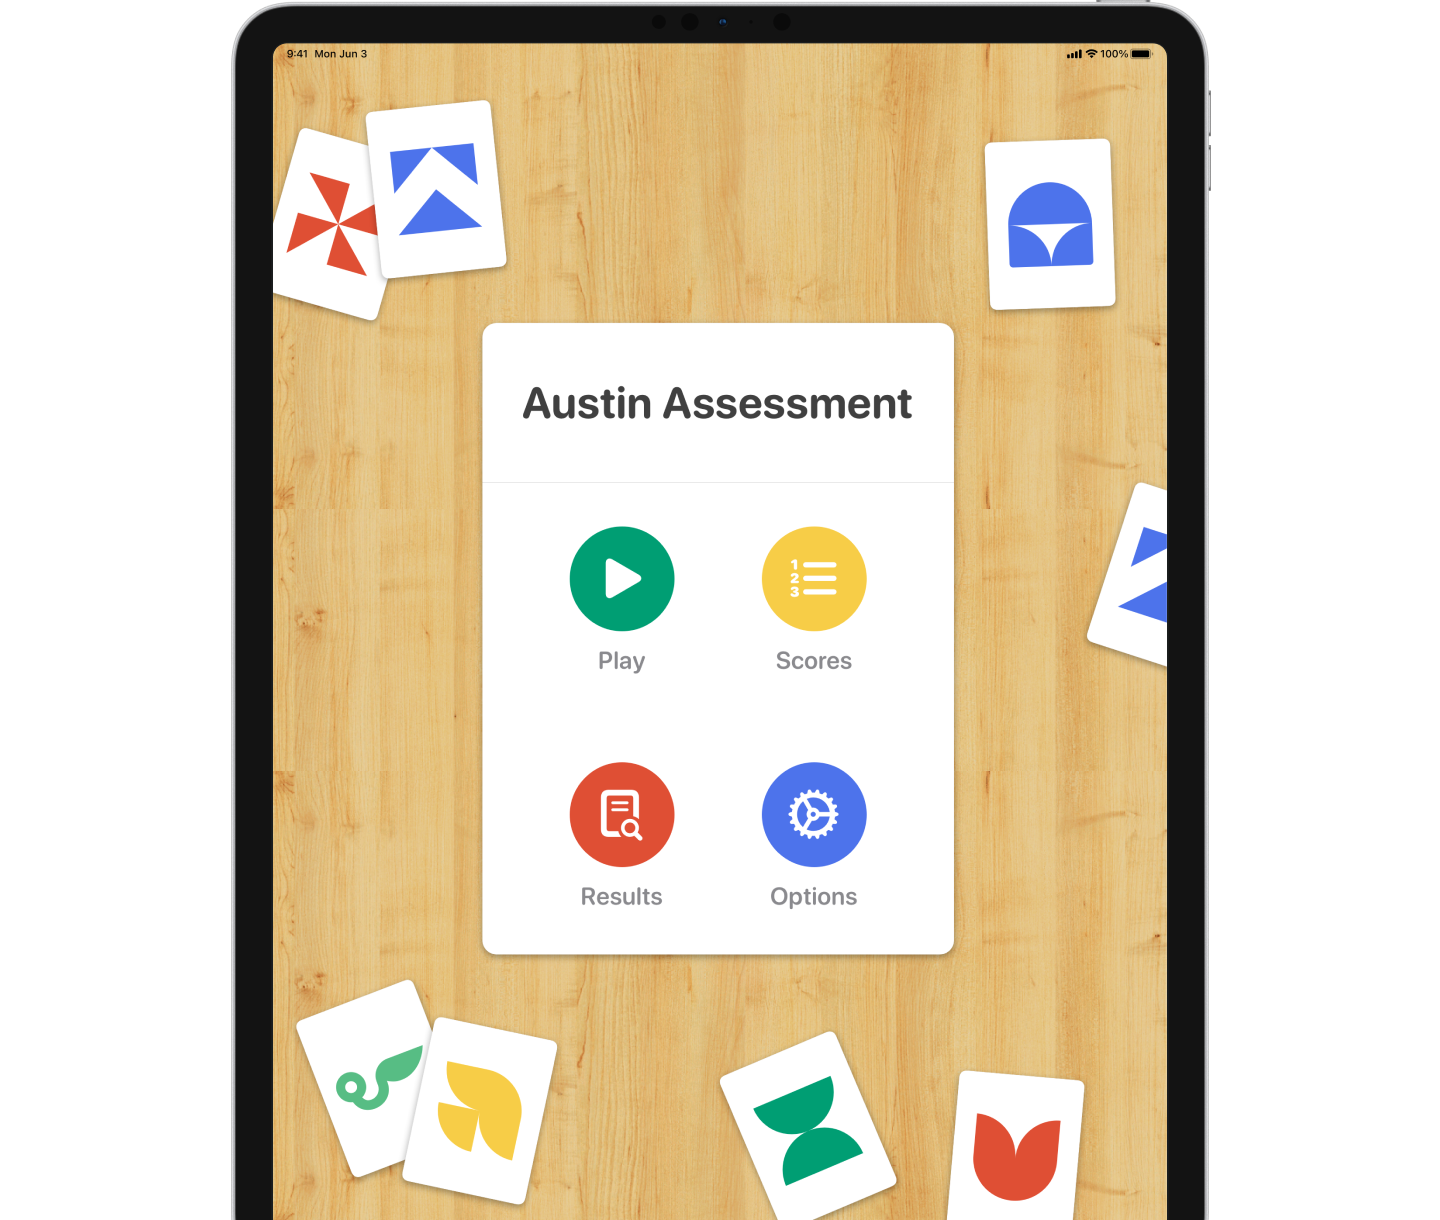 iPad showing the Austin Assessment game menu